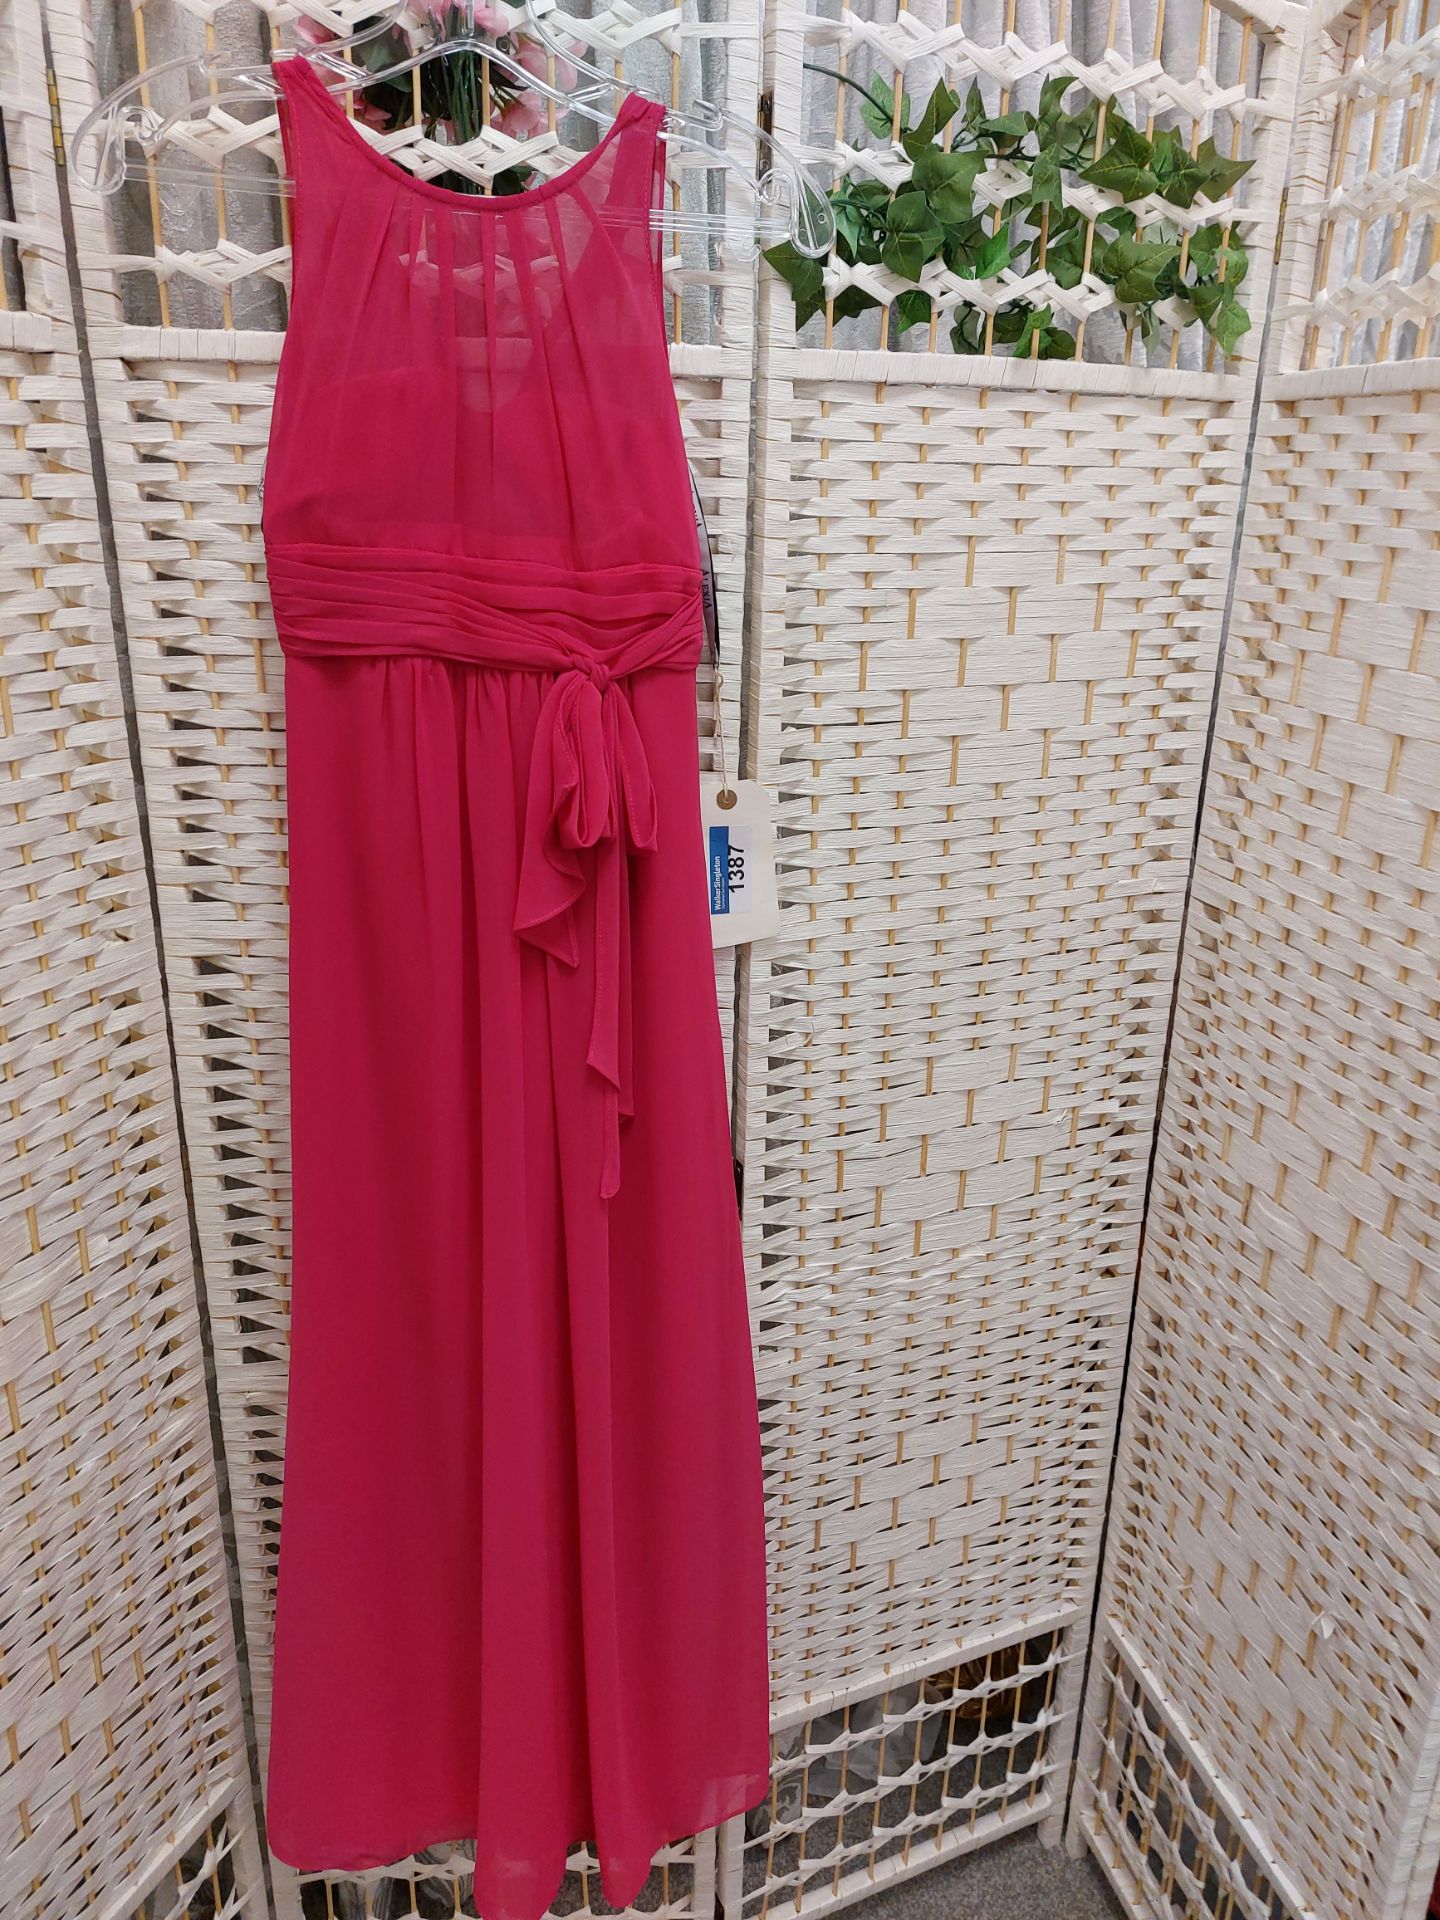 Alexia Raspberry Dress Age 8 Style 55 - Image 2 of 2